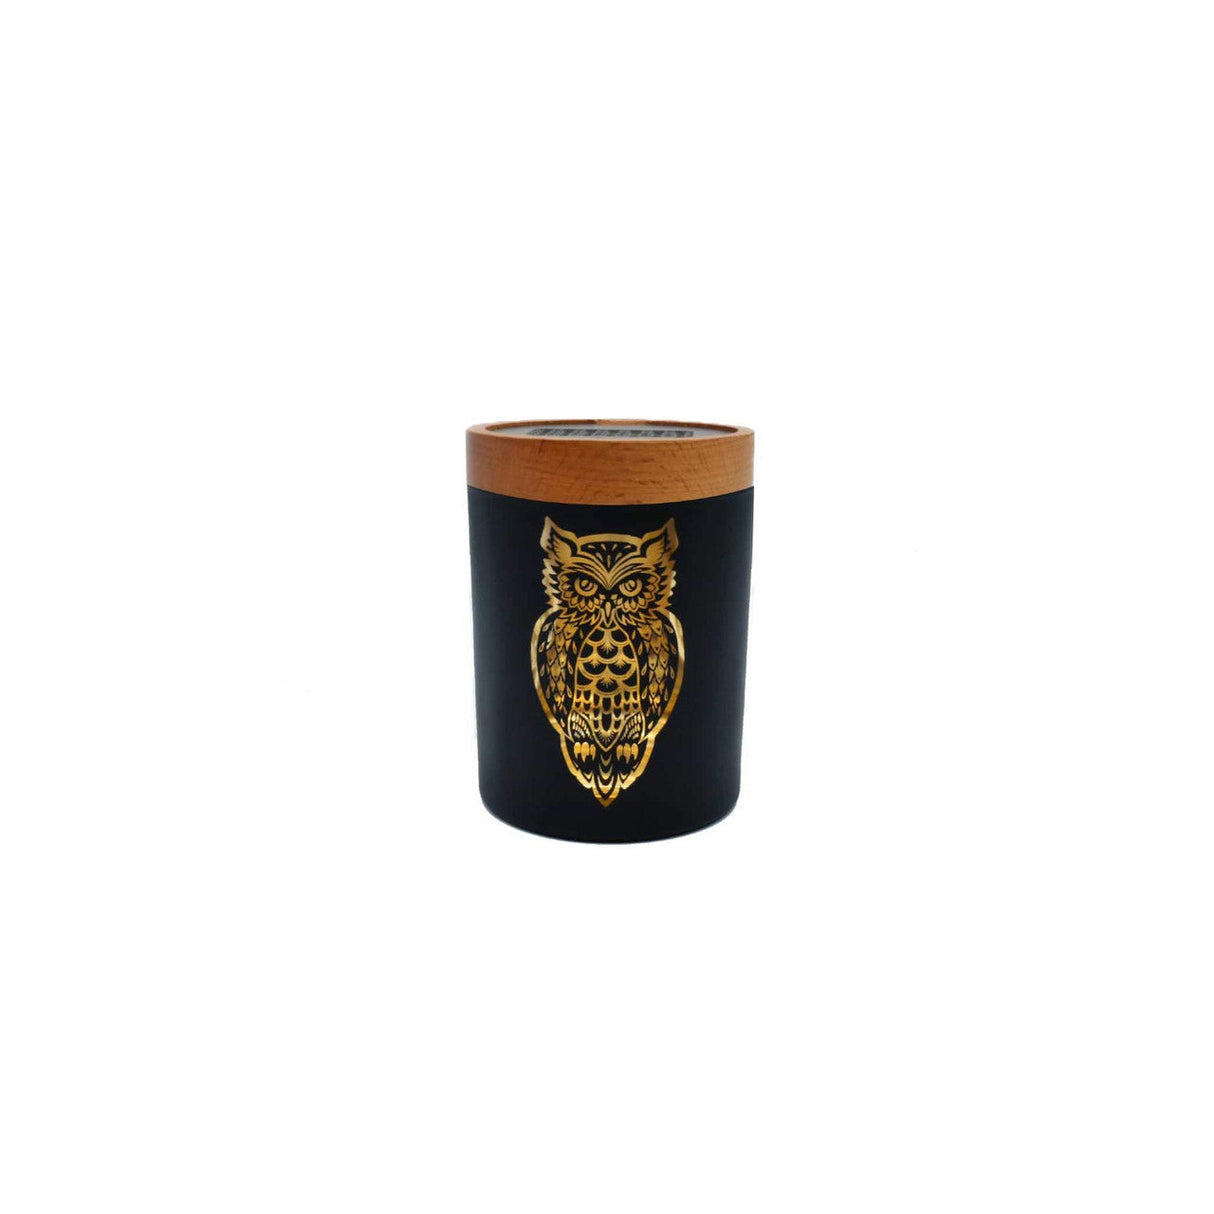 V Syndicate Smart Stash Jar Medium - Owllusion Orange, Wood, Portable Design